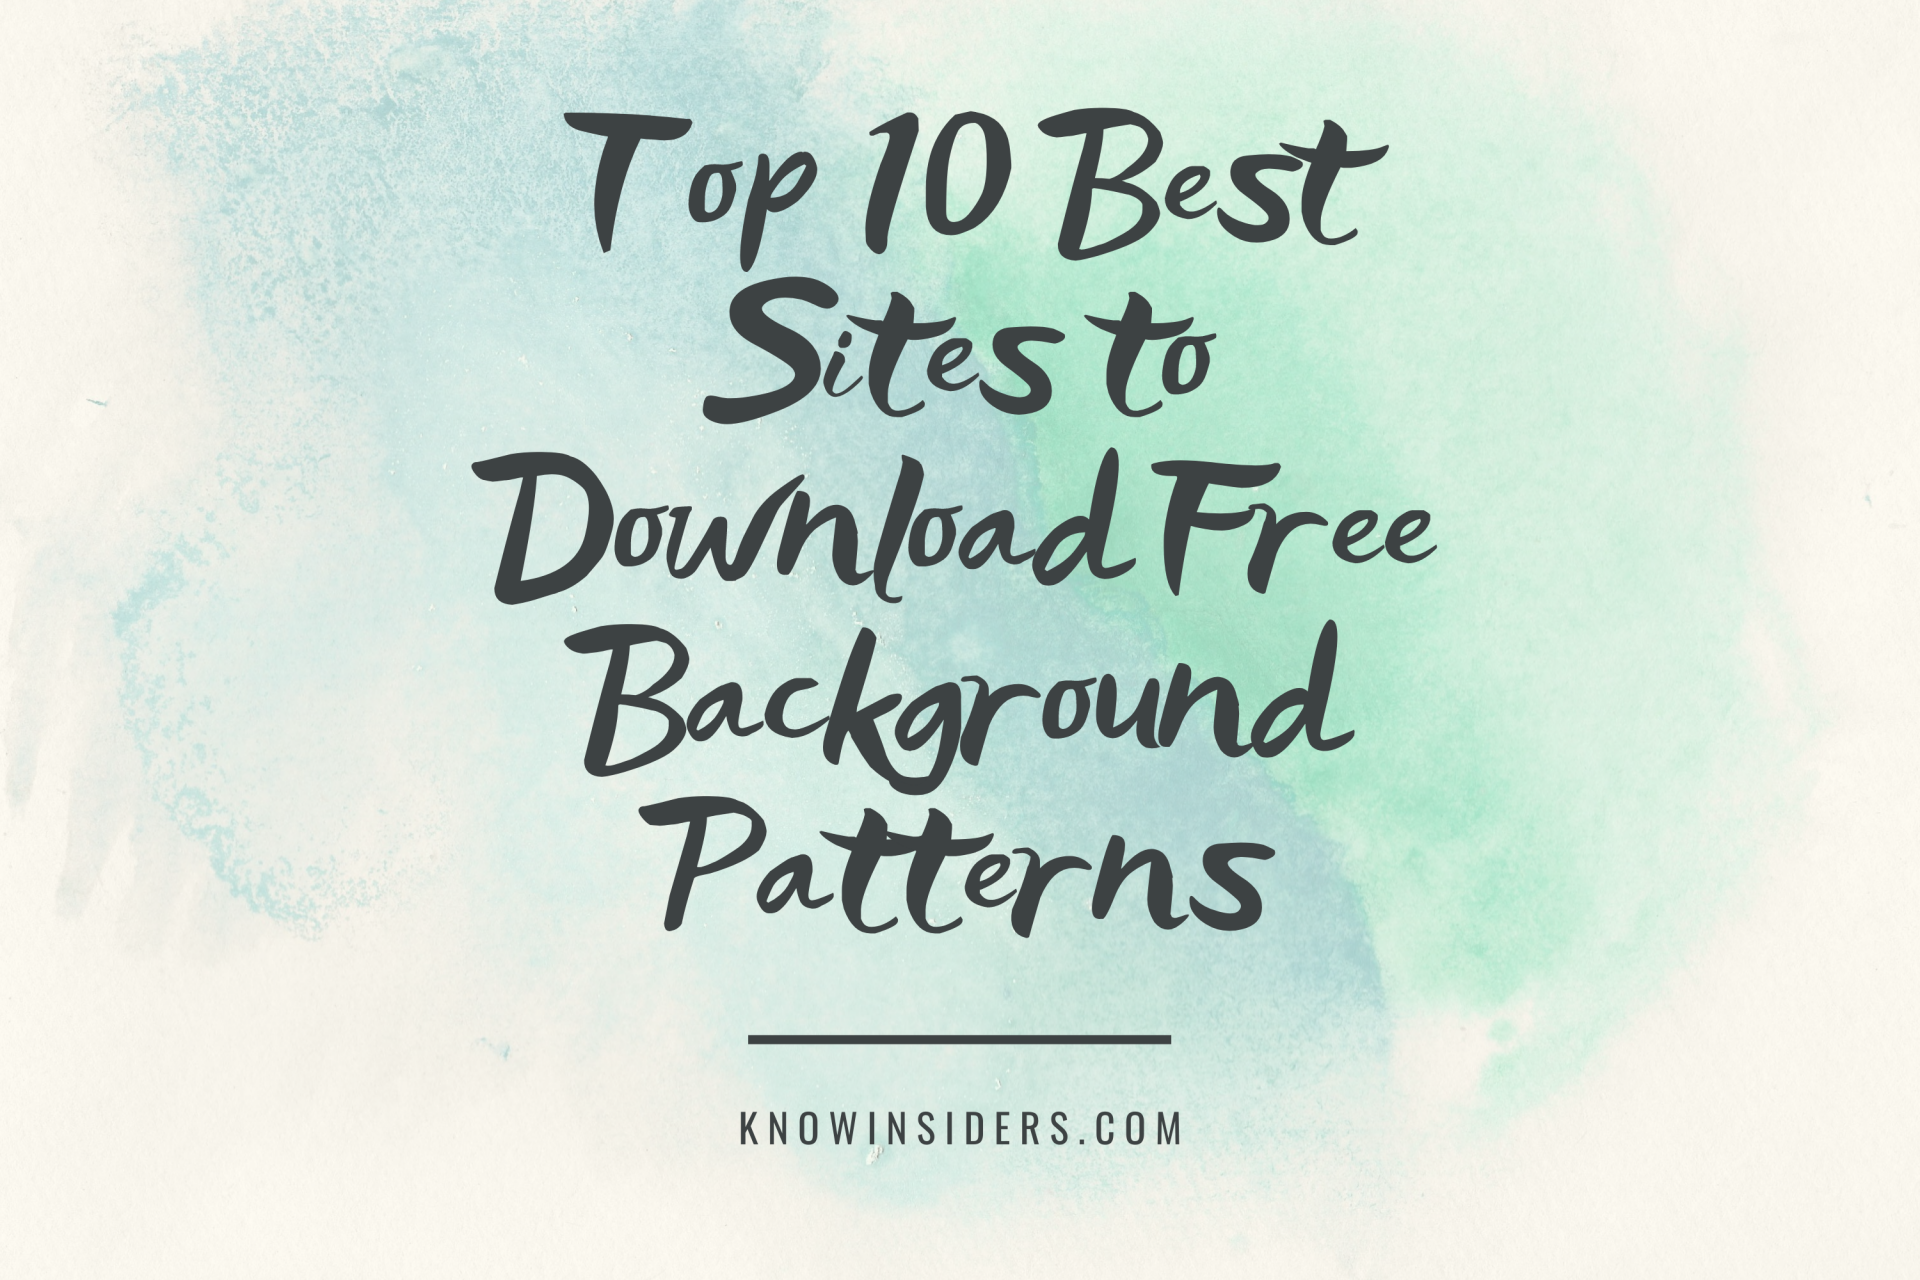 Top 10 Best WebSites to Download Free Background Patterns